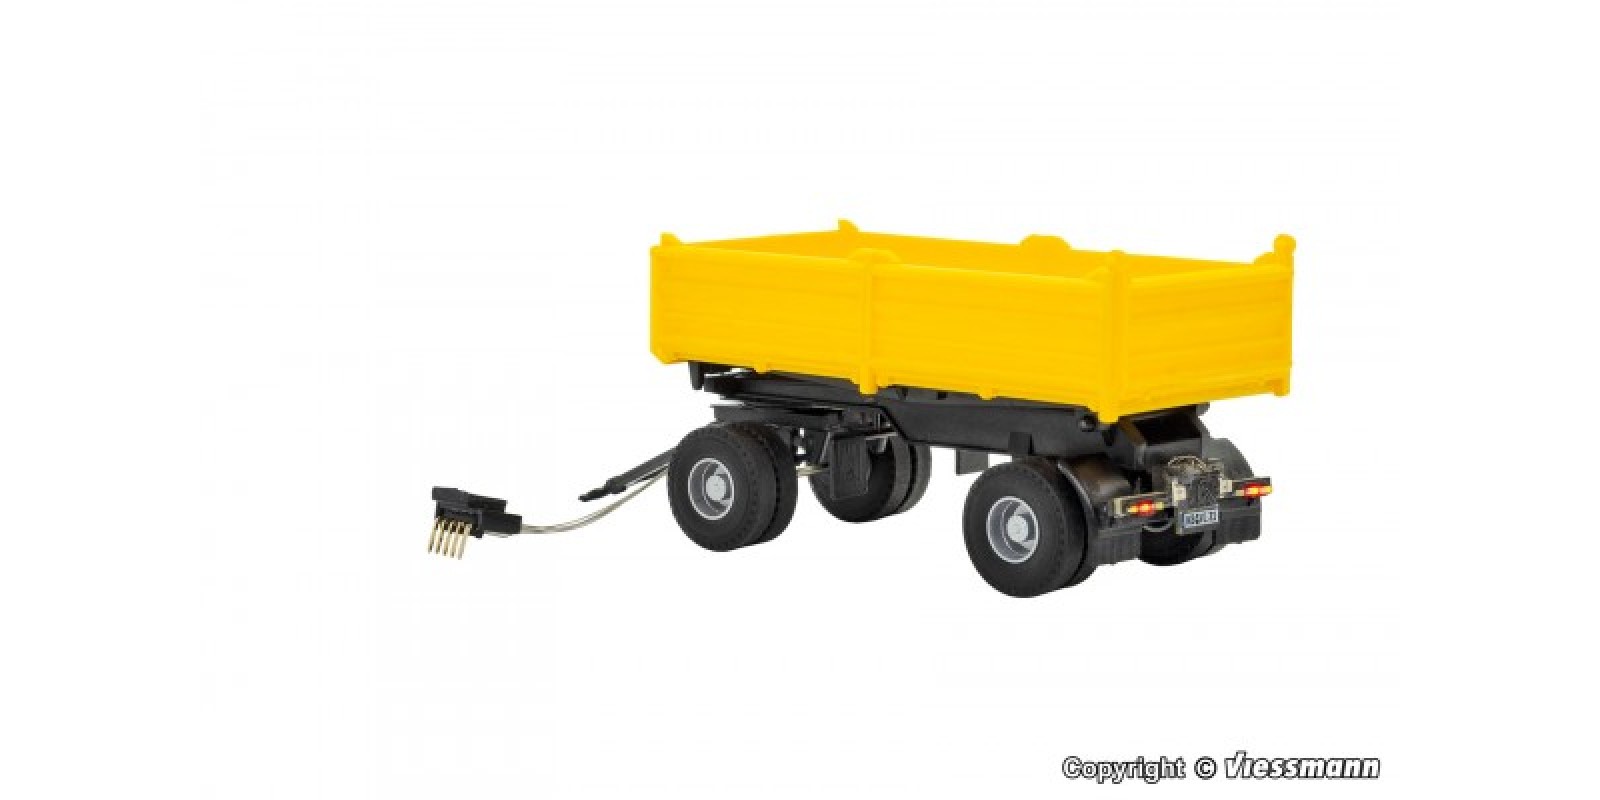 VI8215 H0 2-axle dump trailer, yellow, functional model